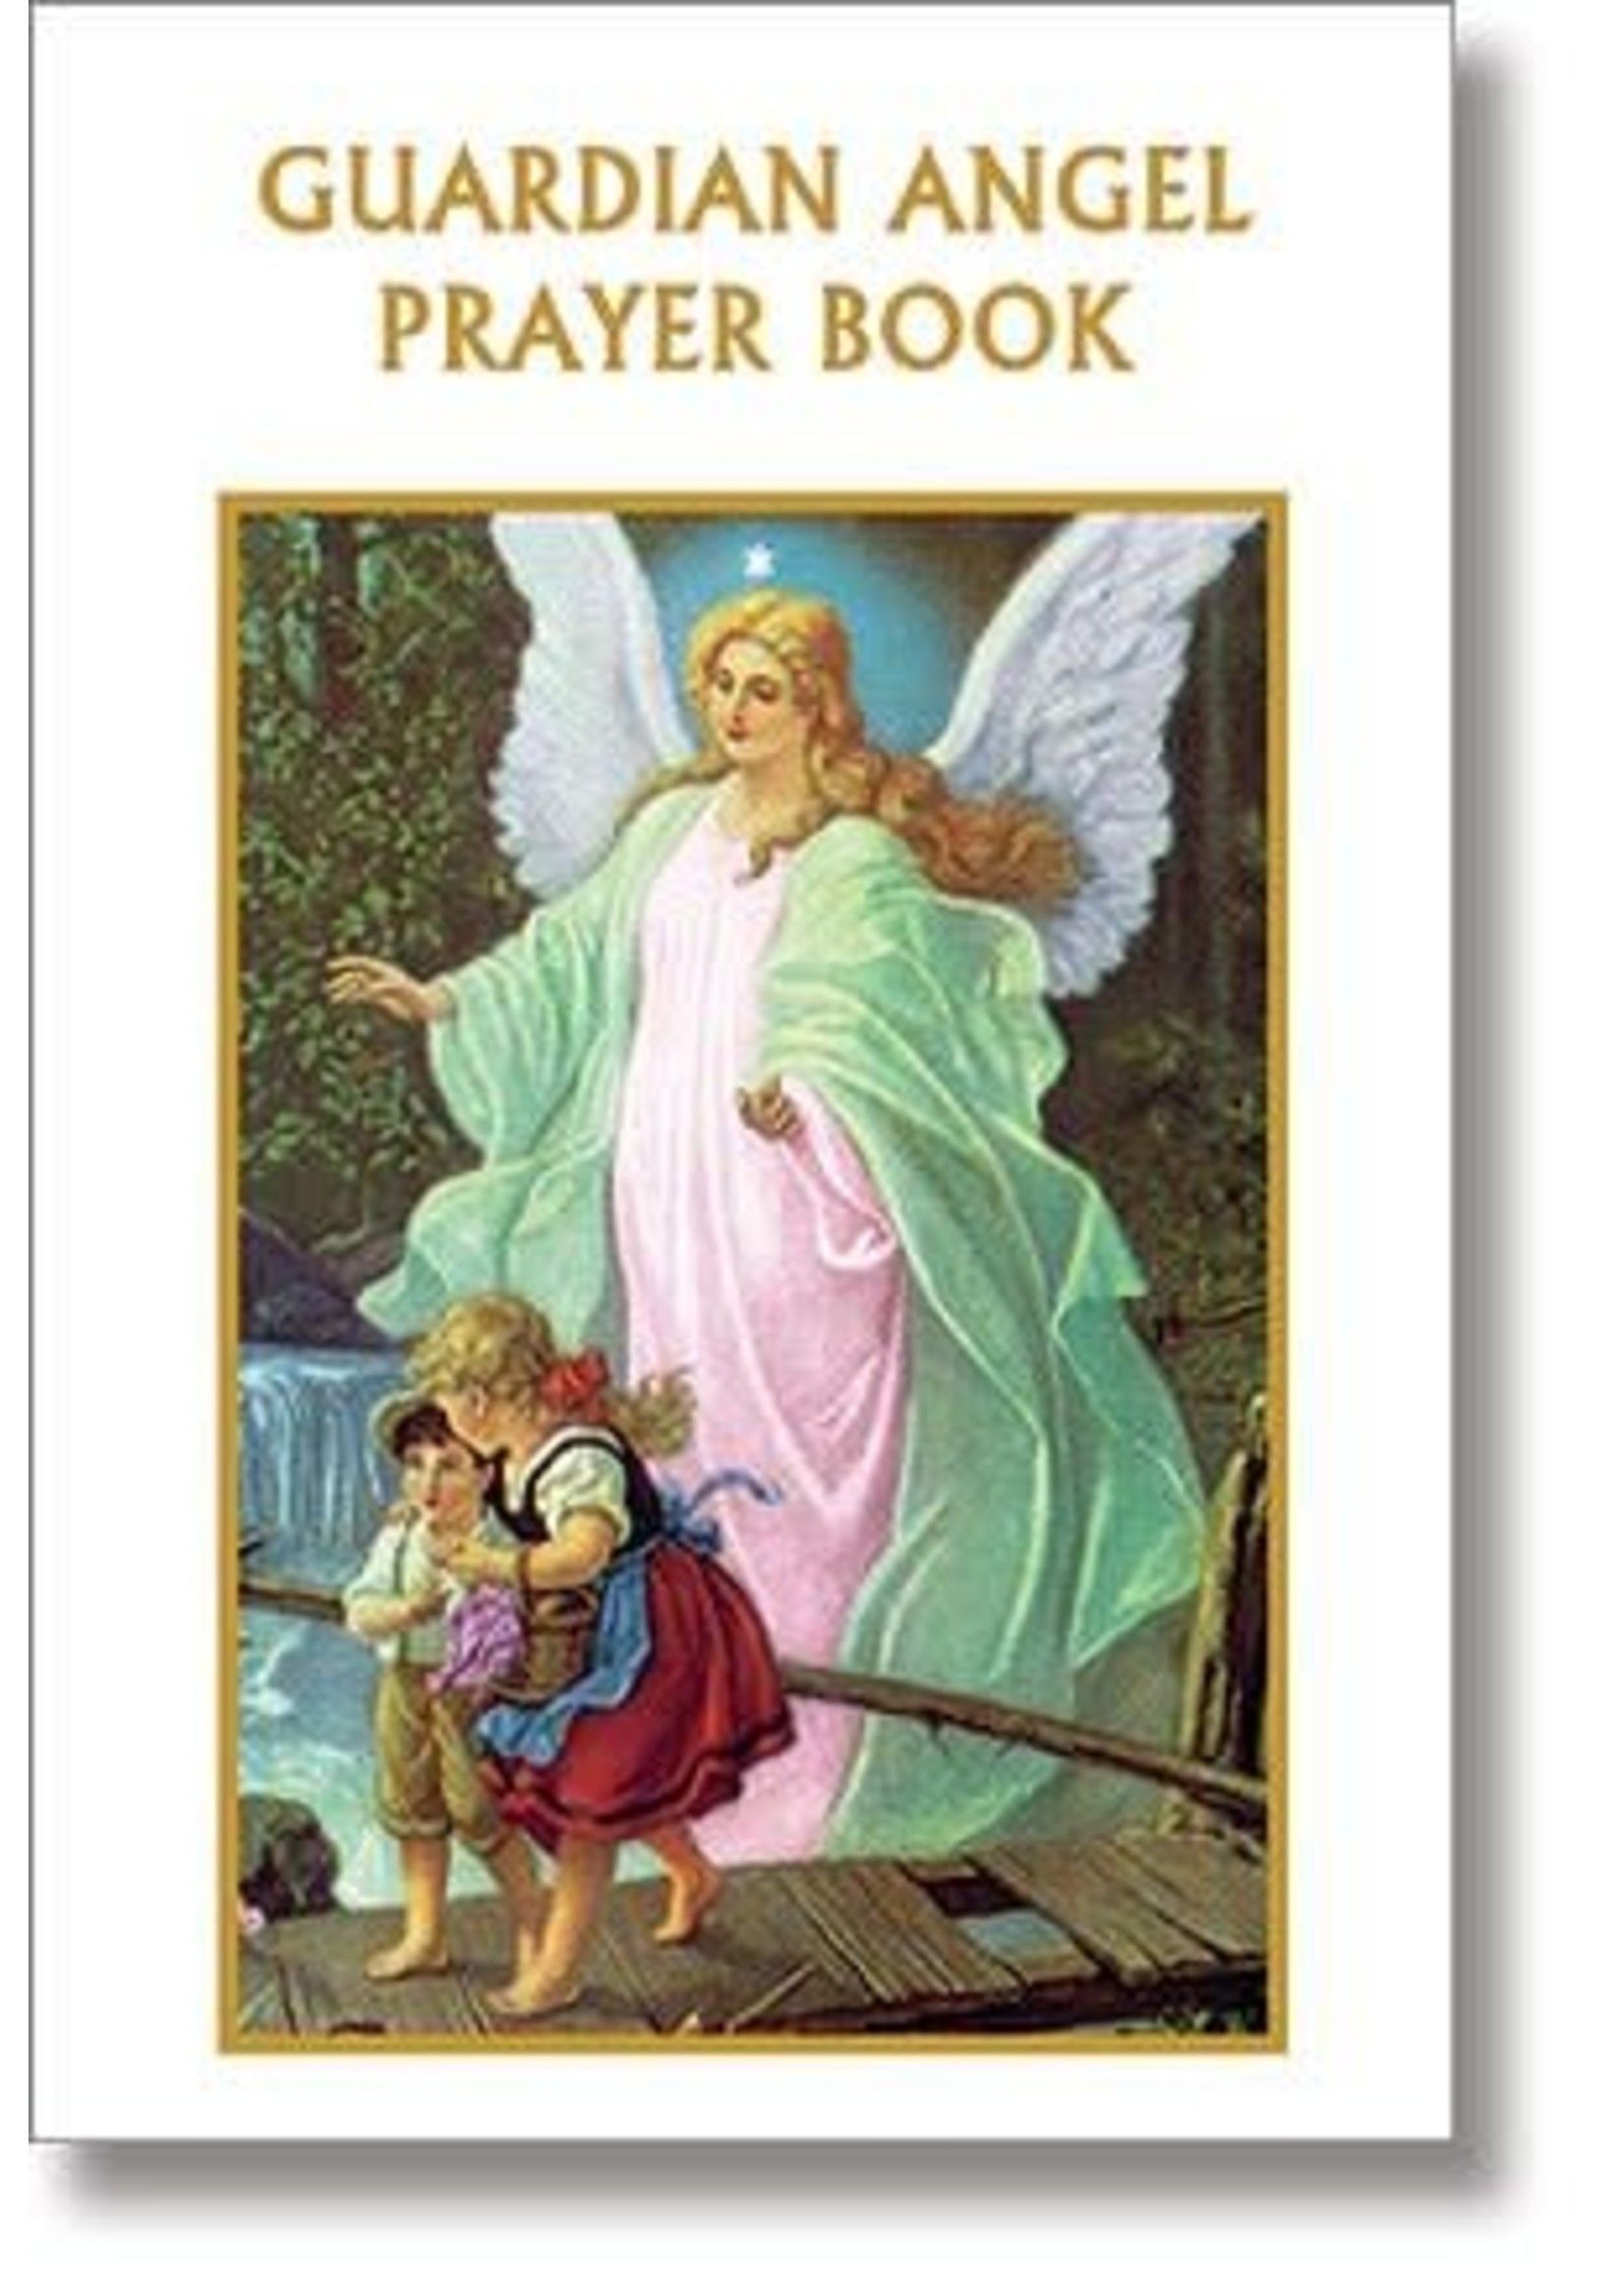 AQUINAS PRESS GUARDIAN ANGEL PRAYER BOOK